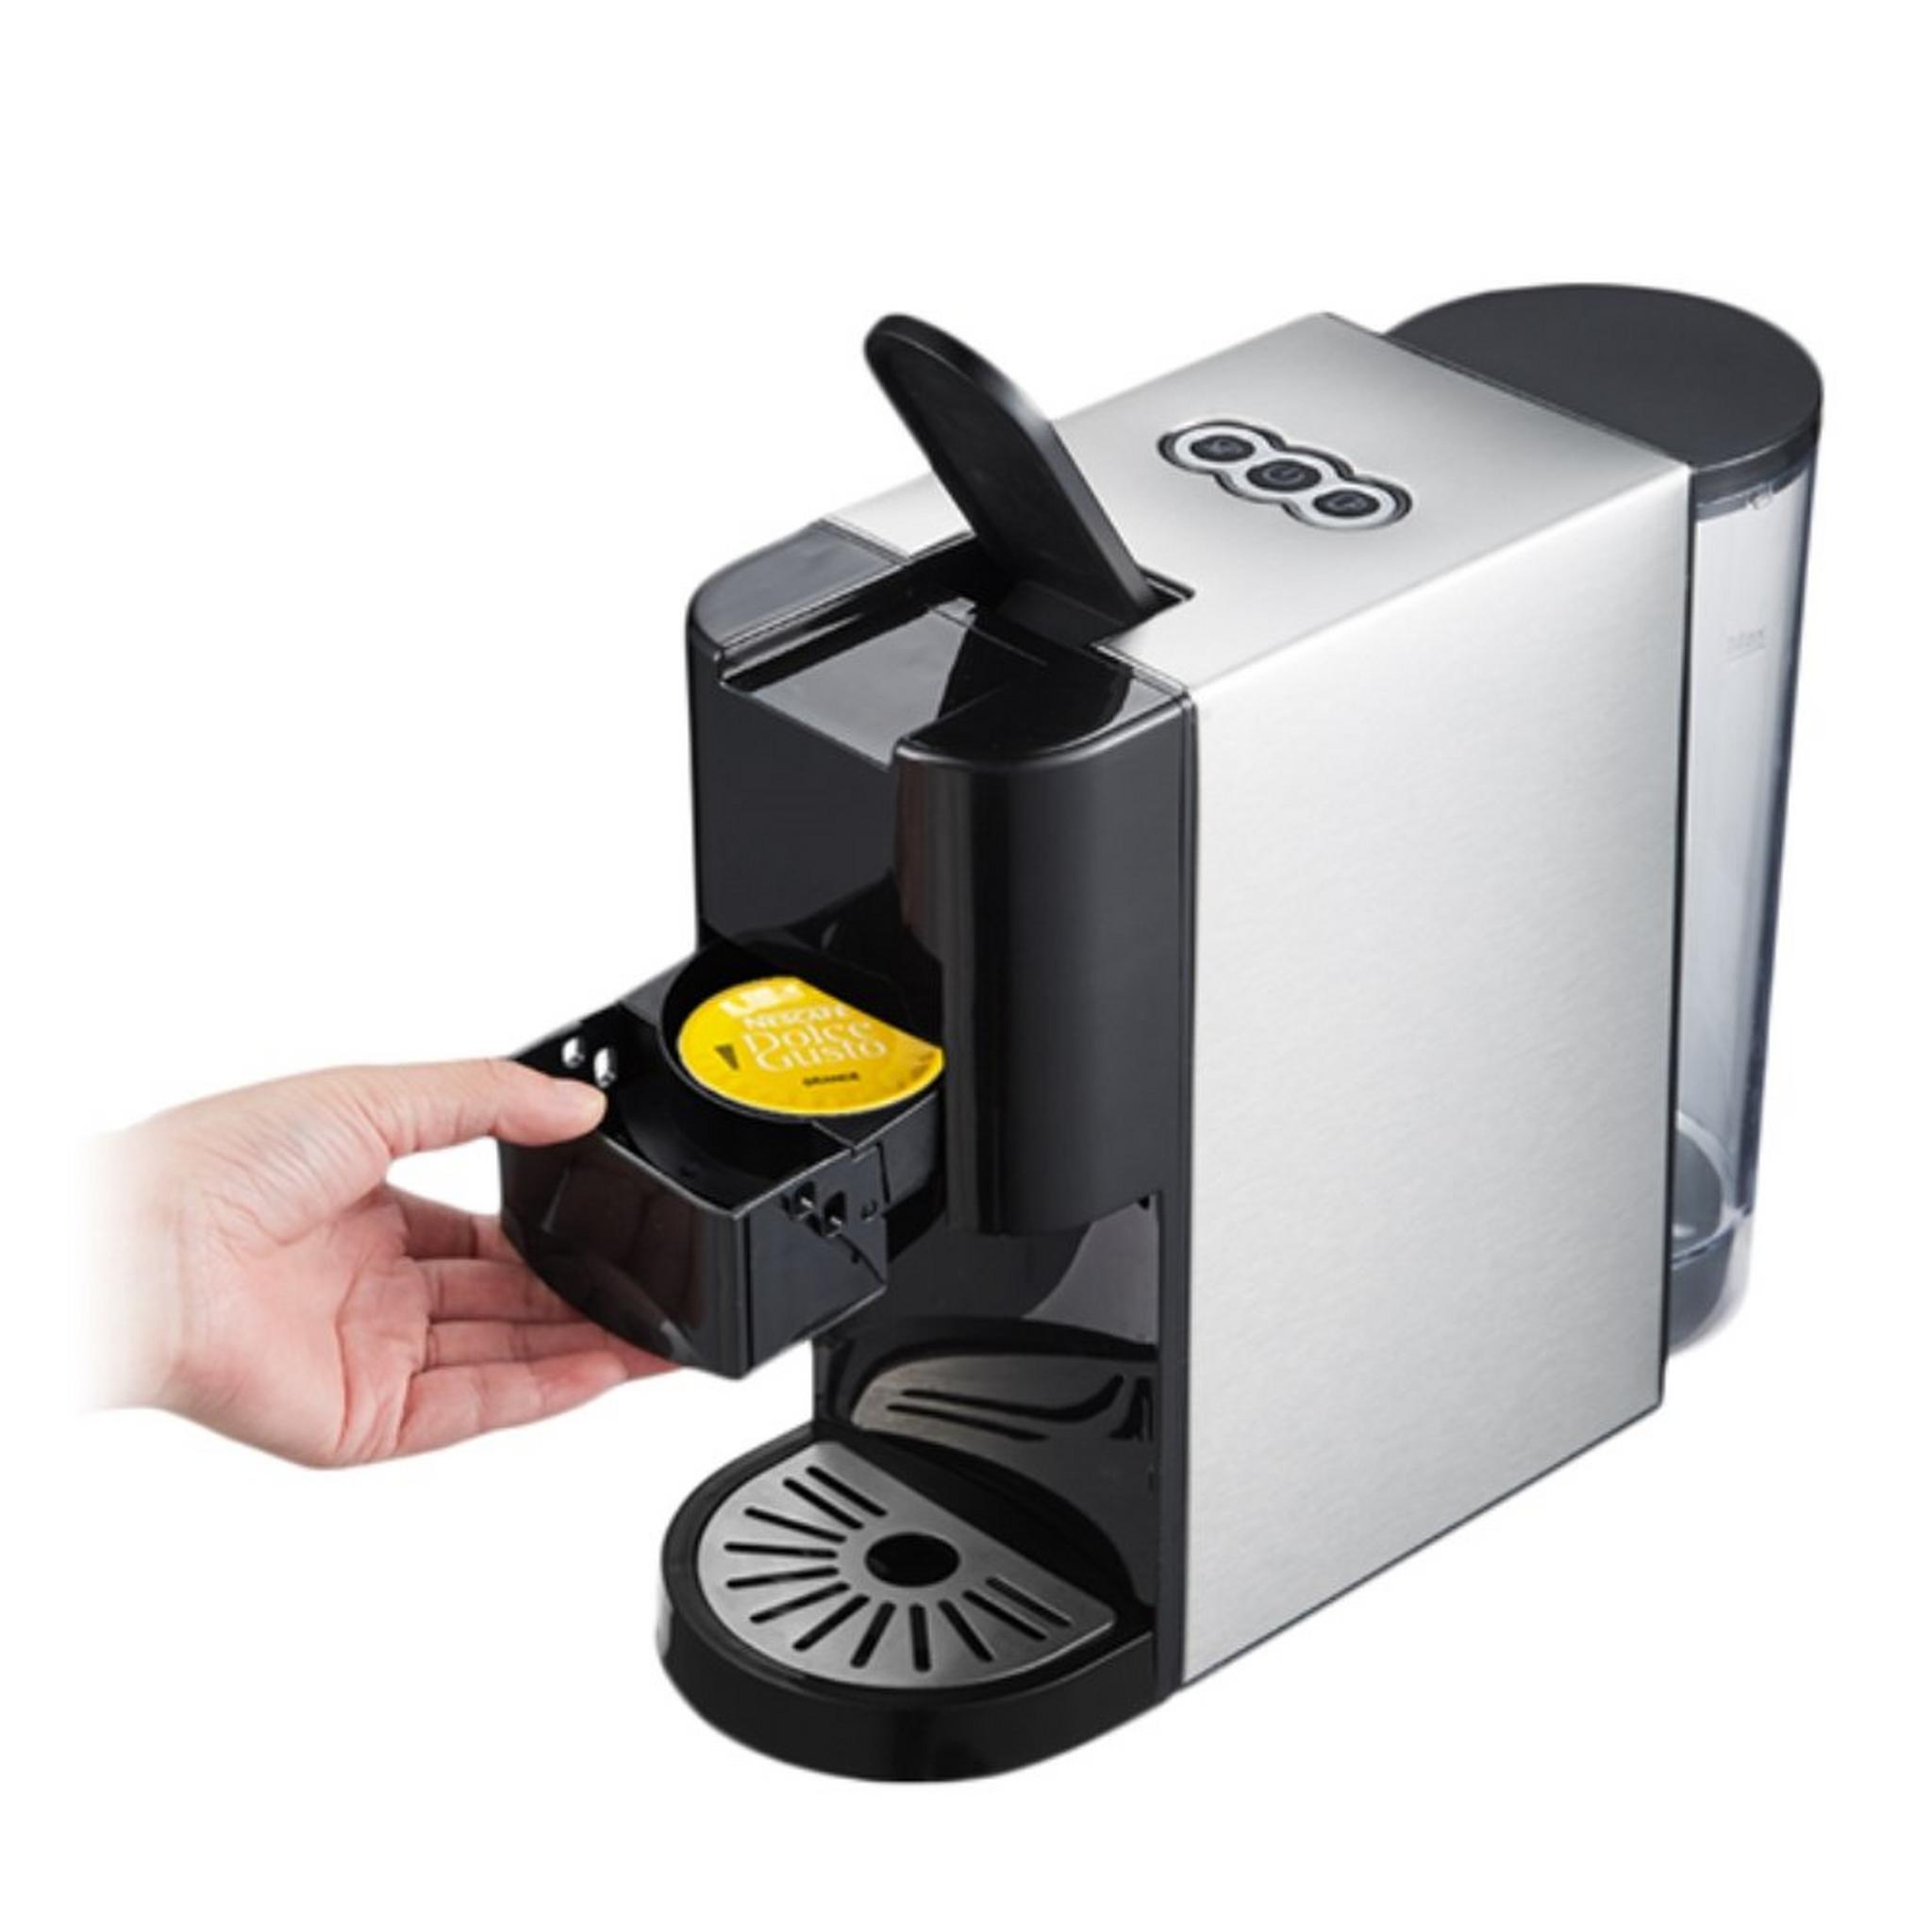 Wansa Multi Capsules Coffee Machine,1450W, 0.8L, AC-513K - Black/Silver